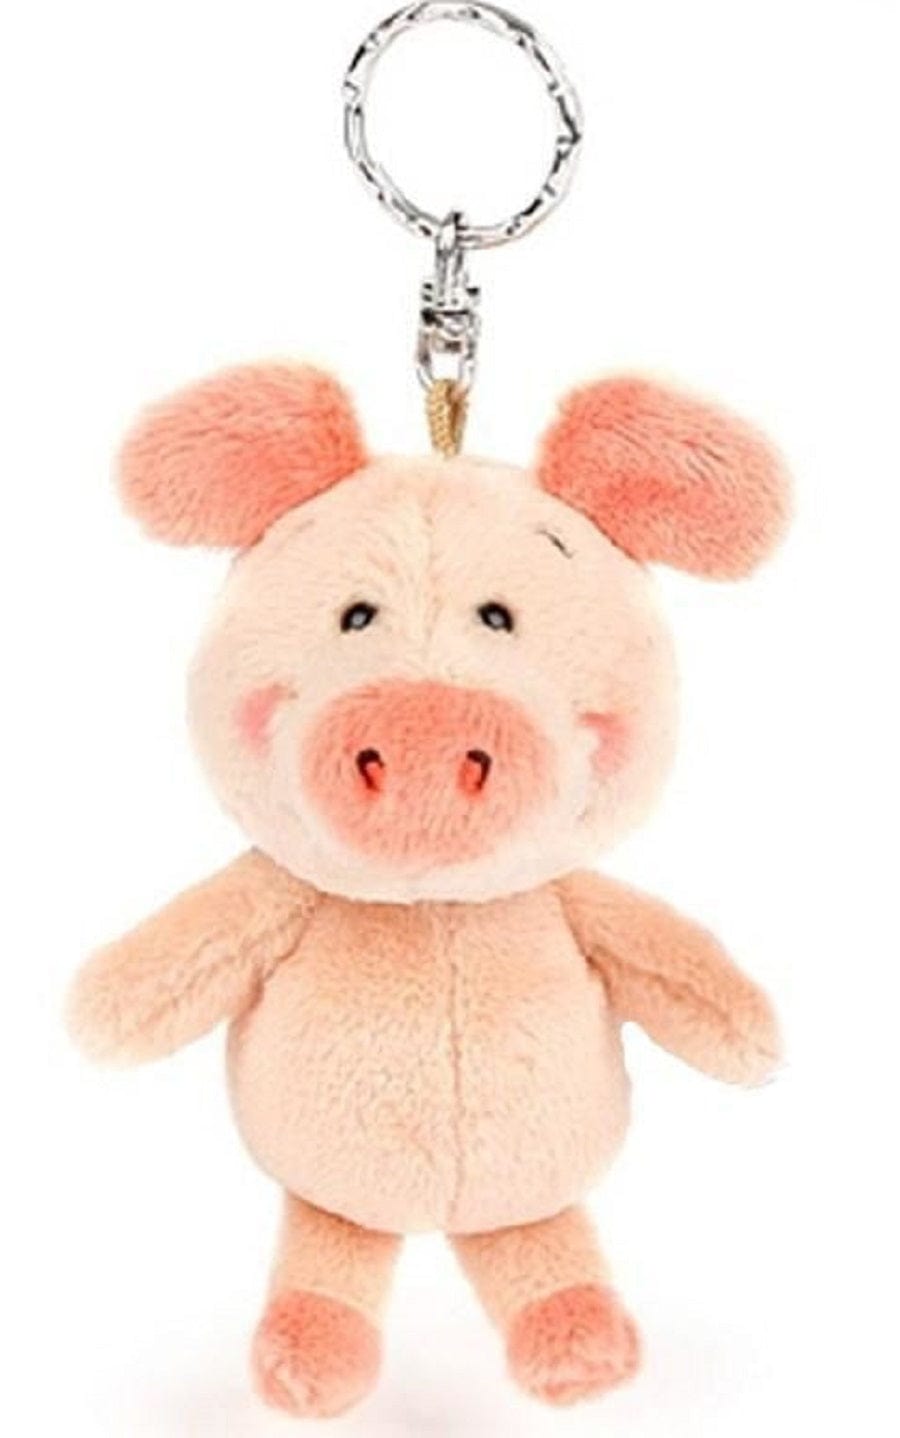 Cute Plush Pig Keychain Large 4" Stuffed Piggy 4 Varieties